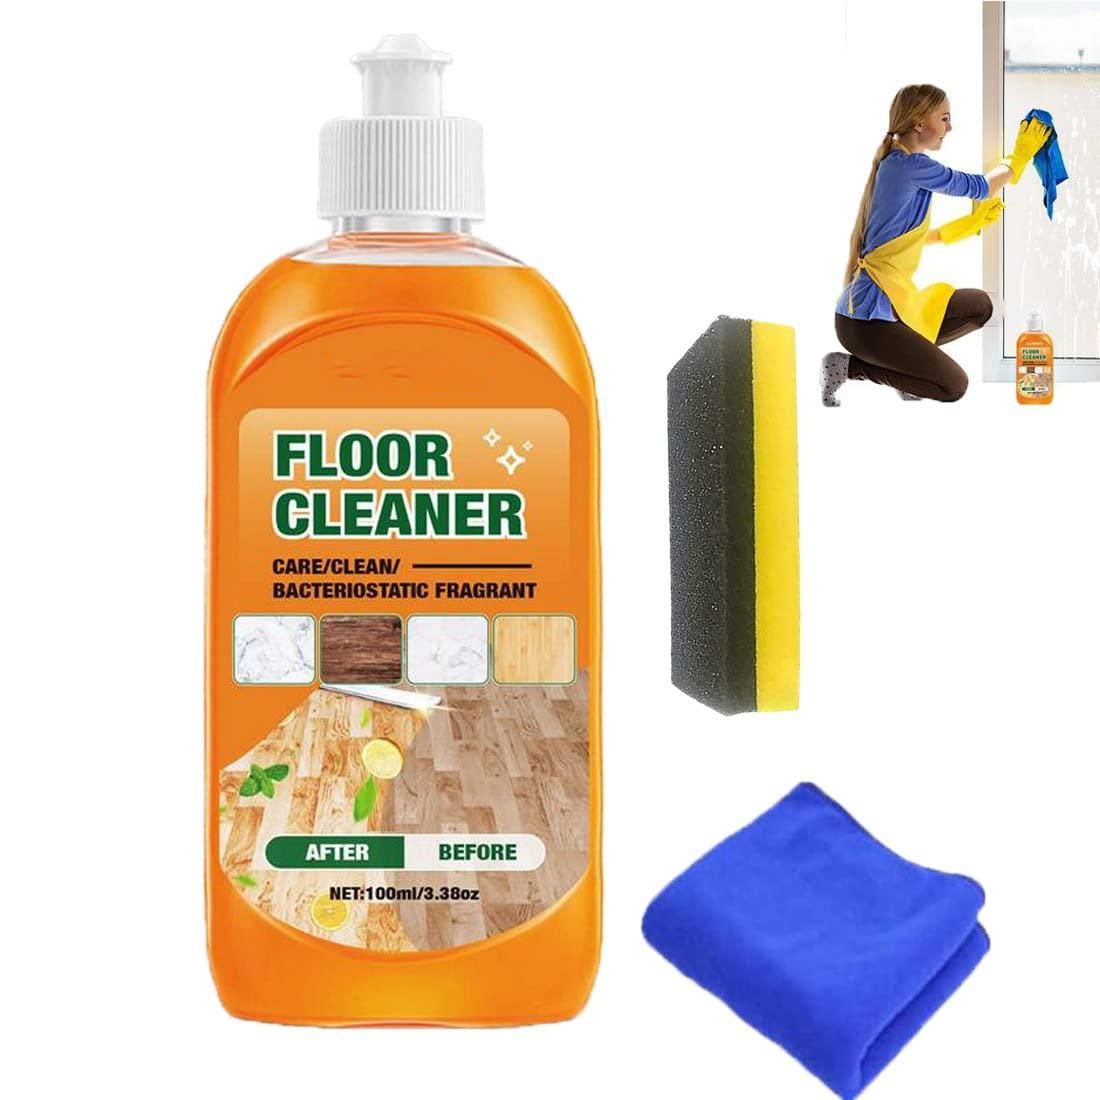 All-Purpose Floor Cleaner